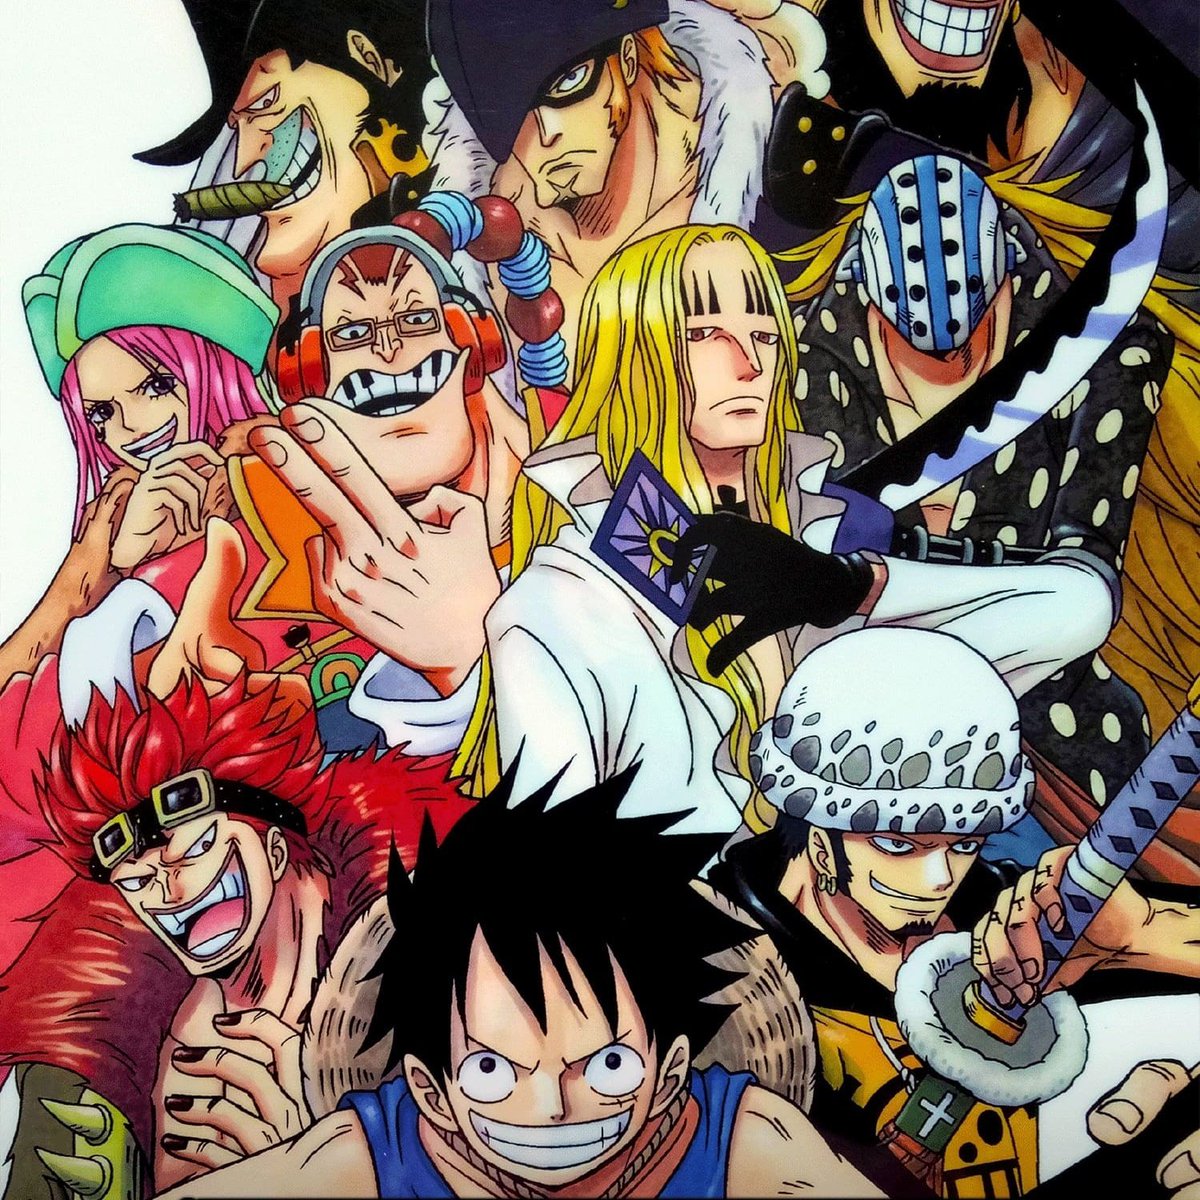 One Piece: Saga “Enies Lobby” estreia dublada na Netflix